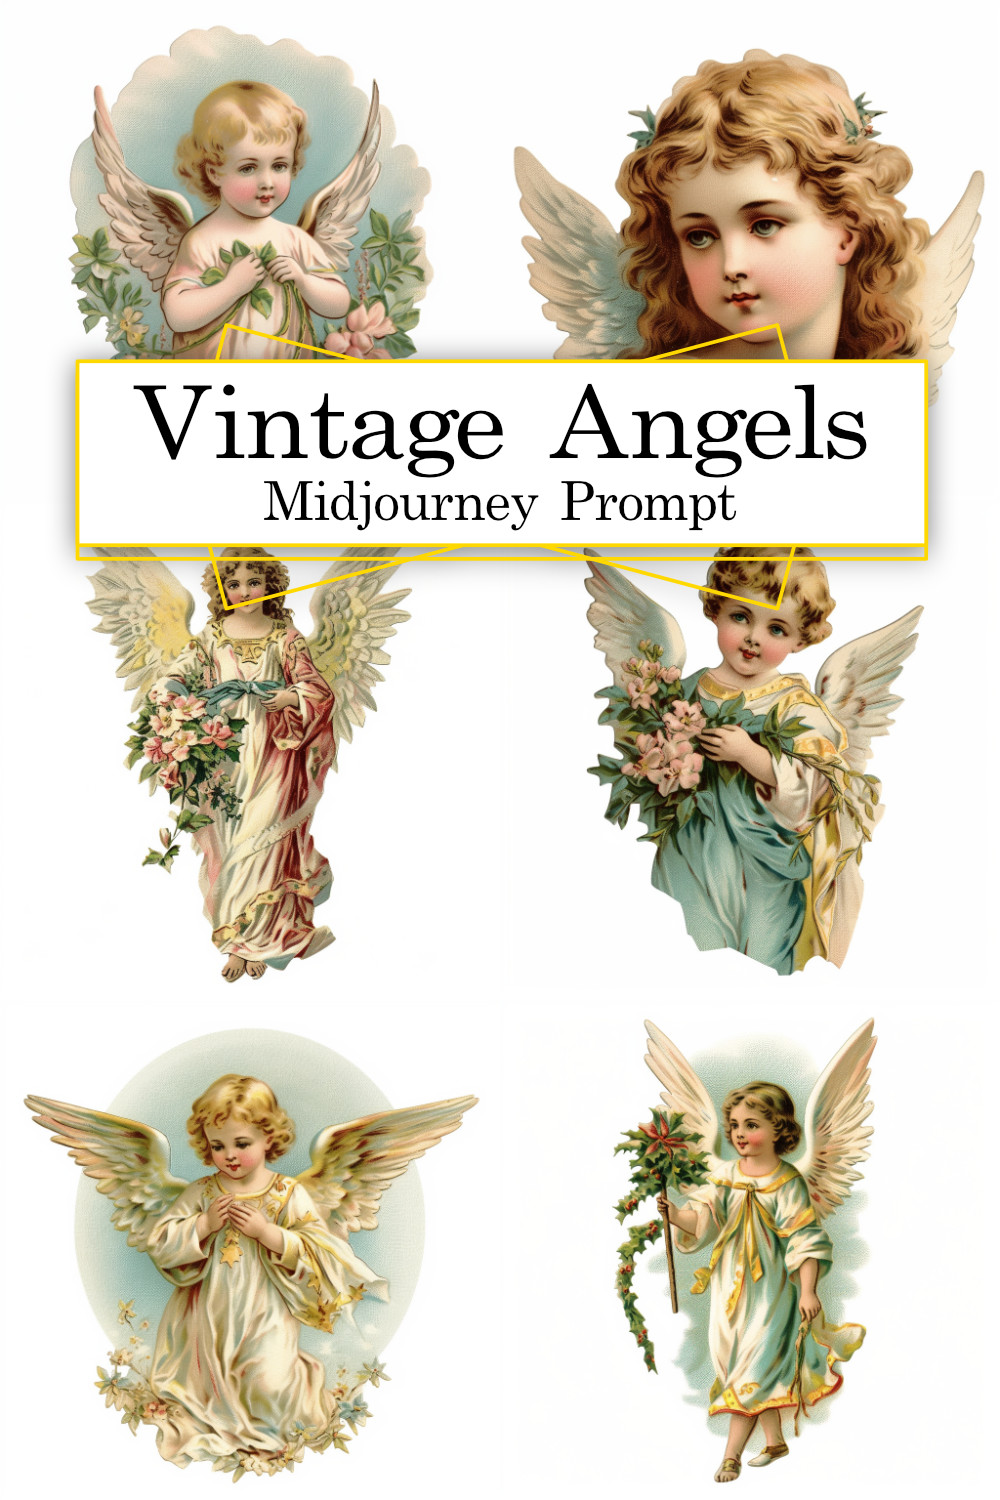 Vintage Angels Cliparts Midjourney Prompt pinterest preview image.